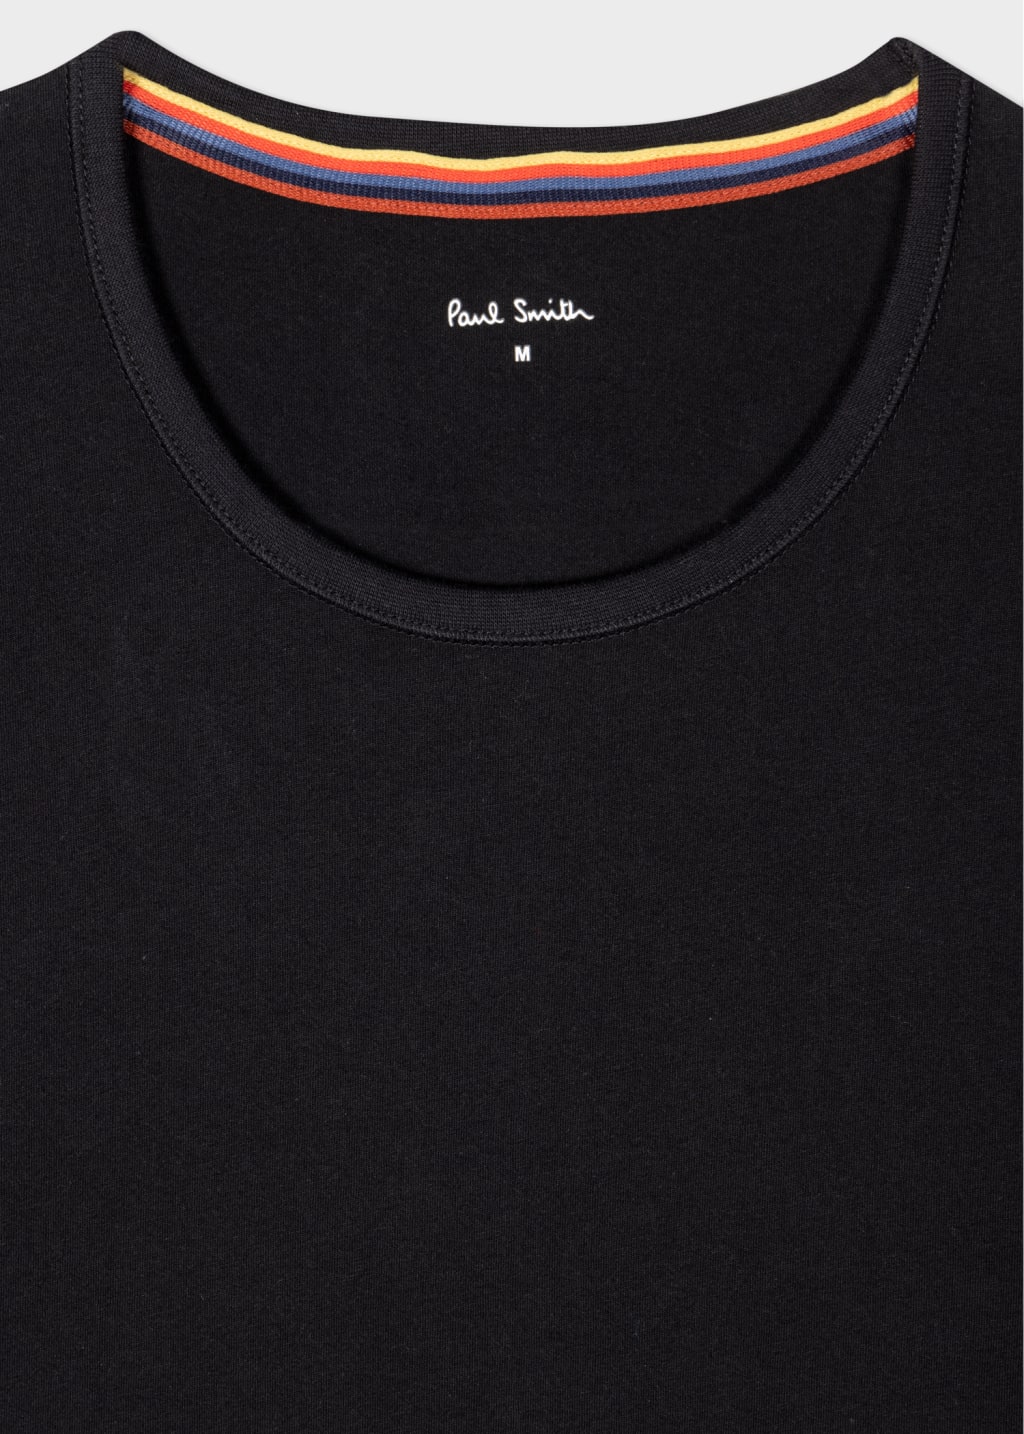 Detail View - Paul Smith & Manchester United  - 'Signature Stripe' Pyjama T-Shirt Set Paul Smith